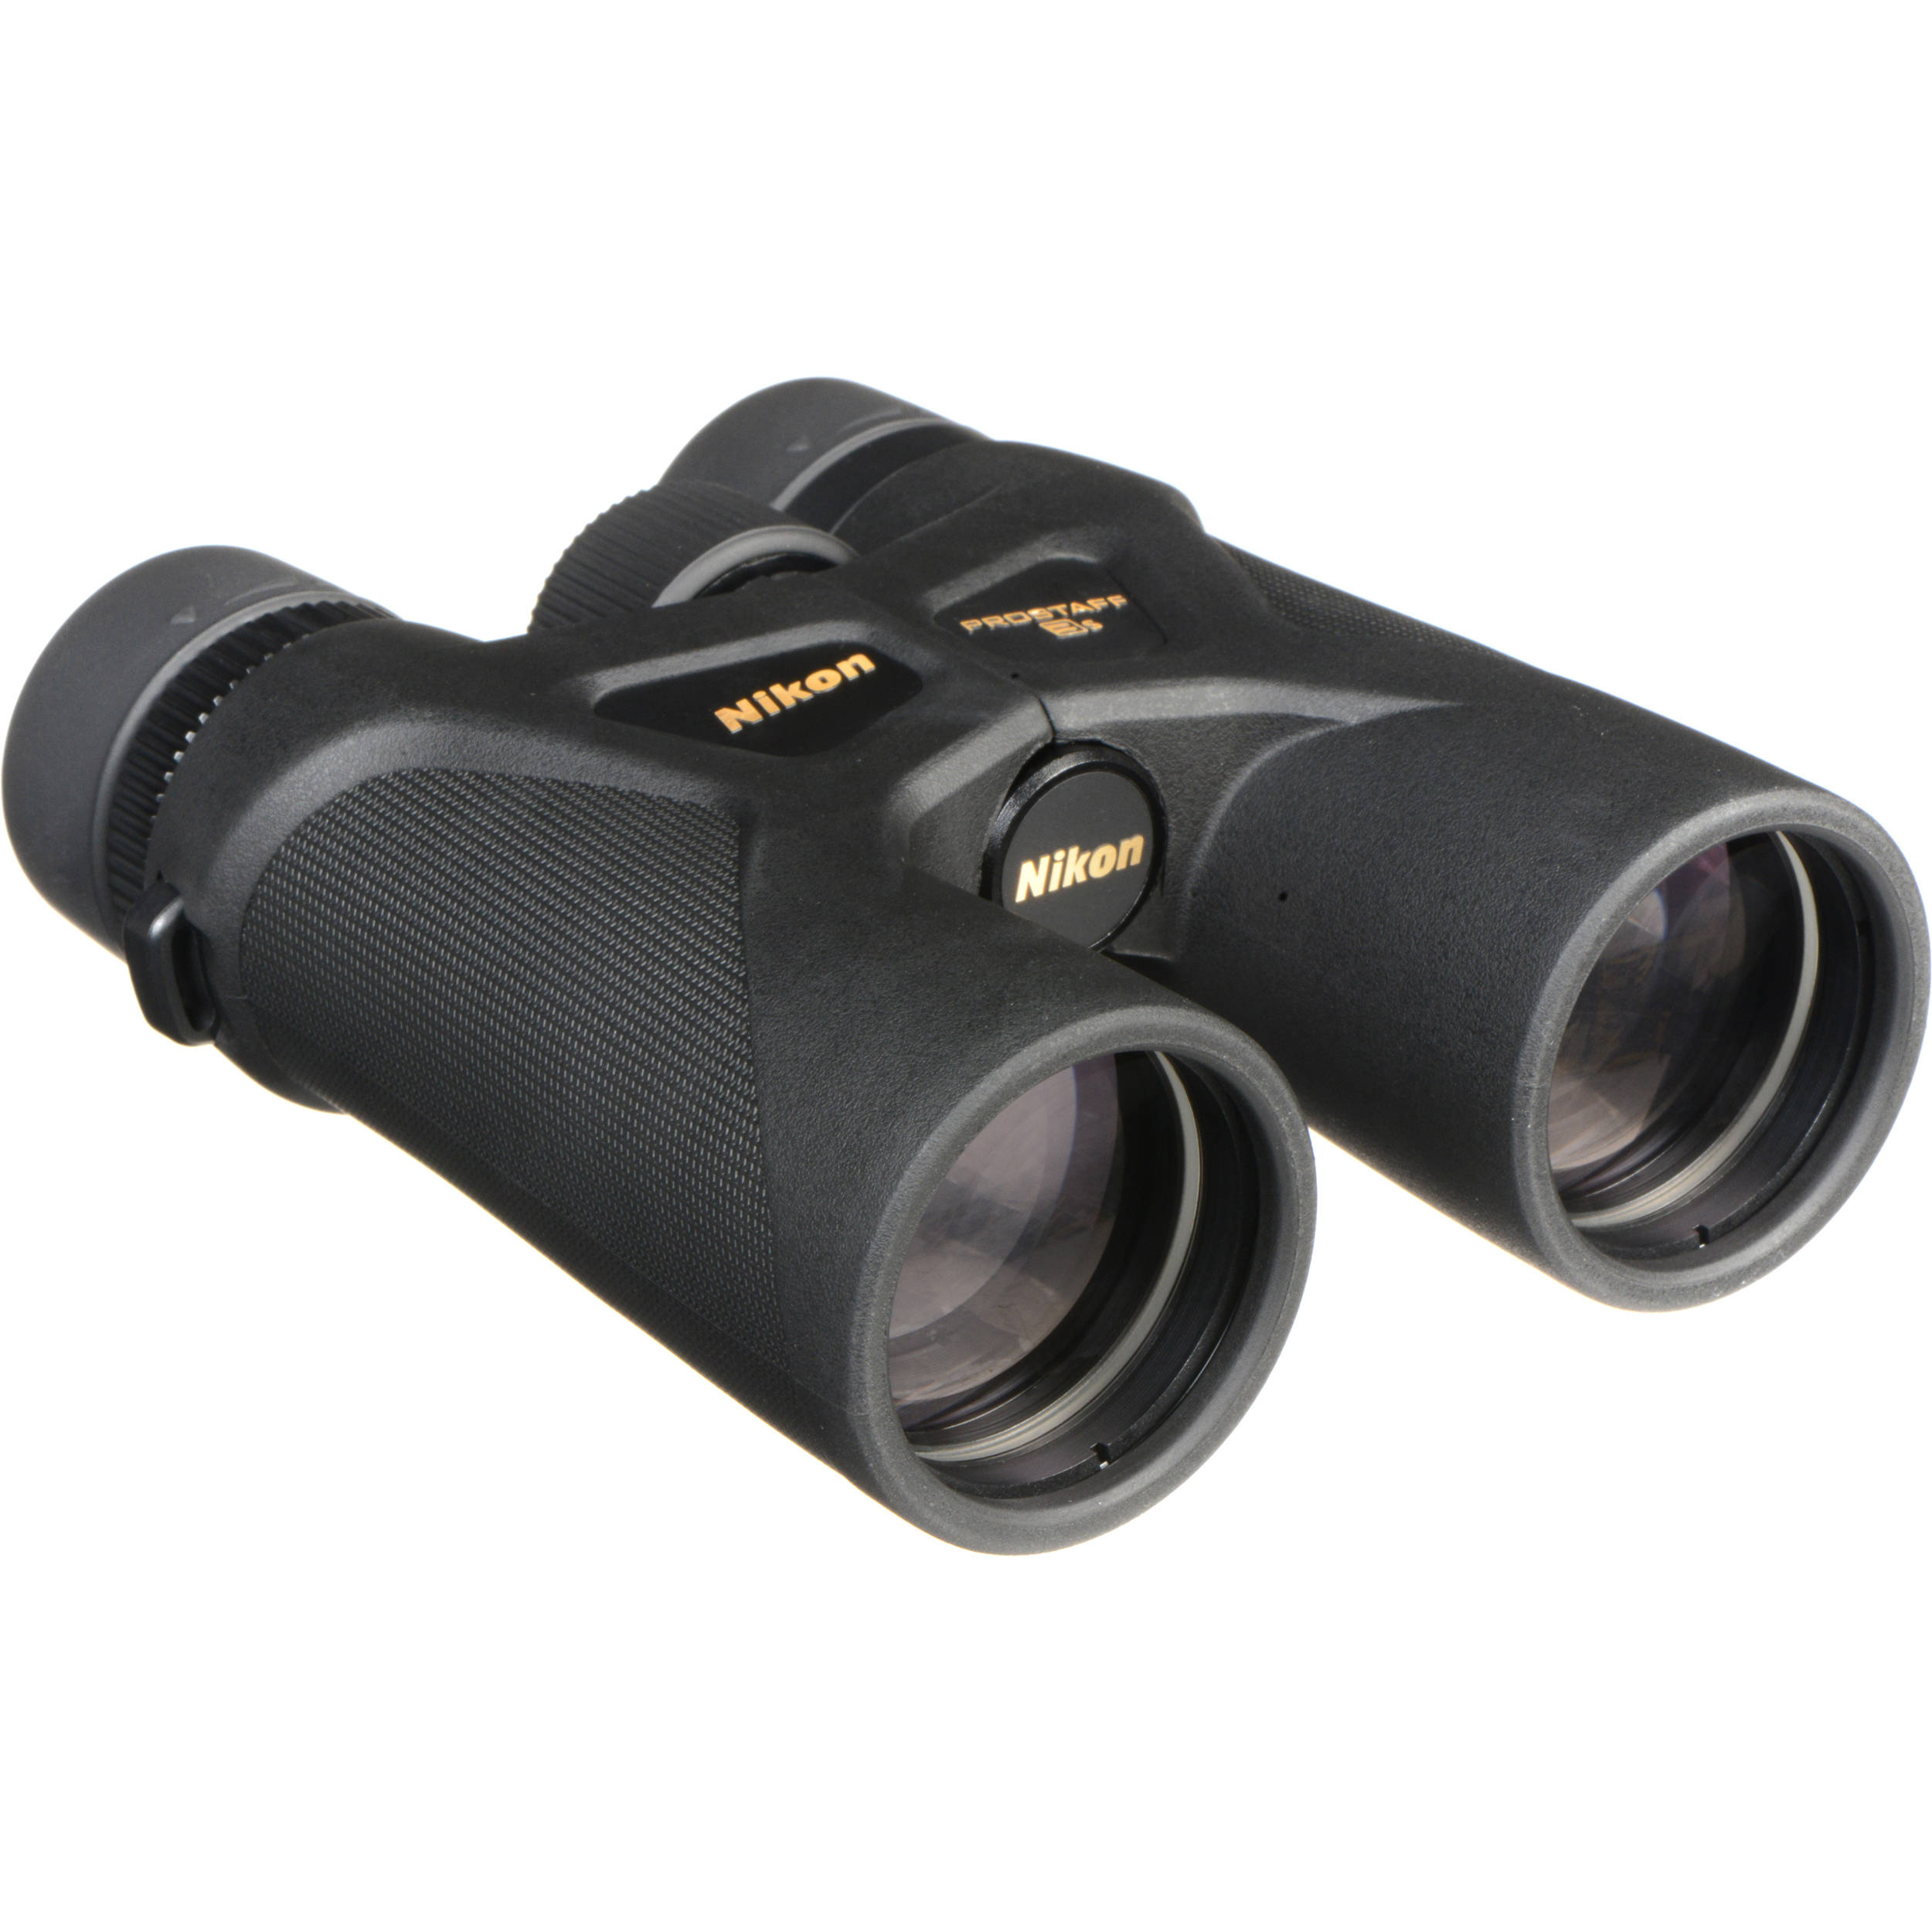 Black binoculars photo